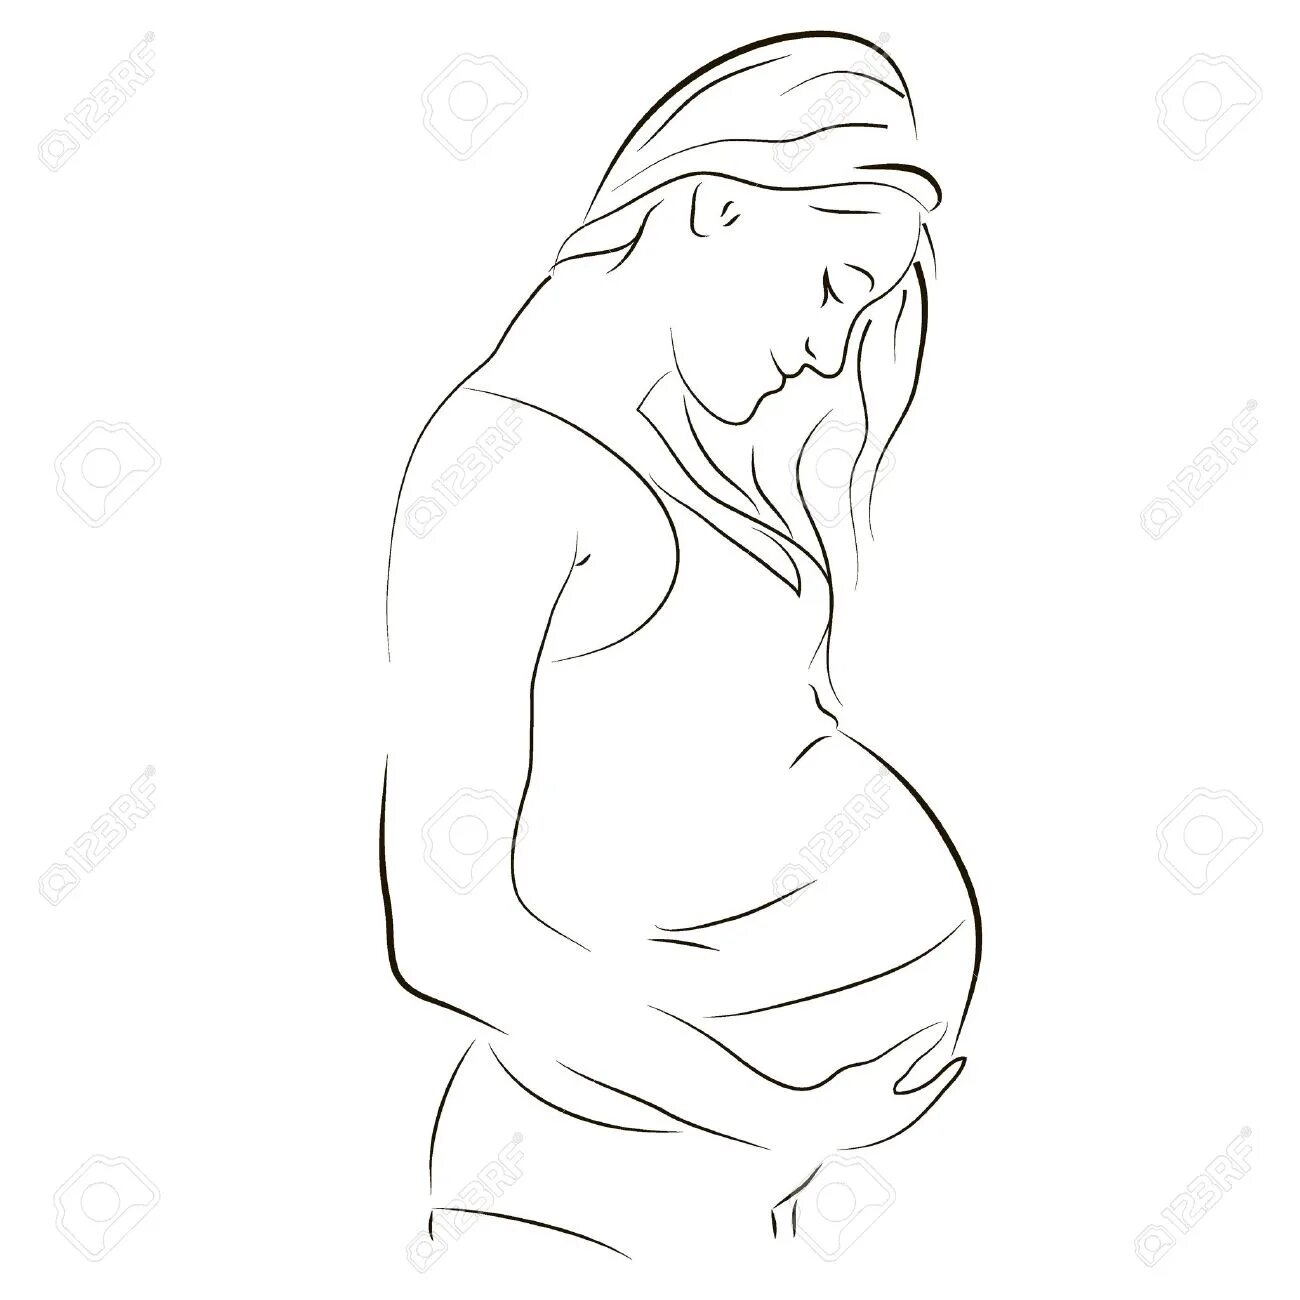 Joyful pregnant girl coloring book